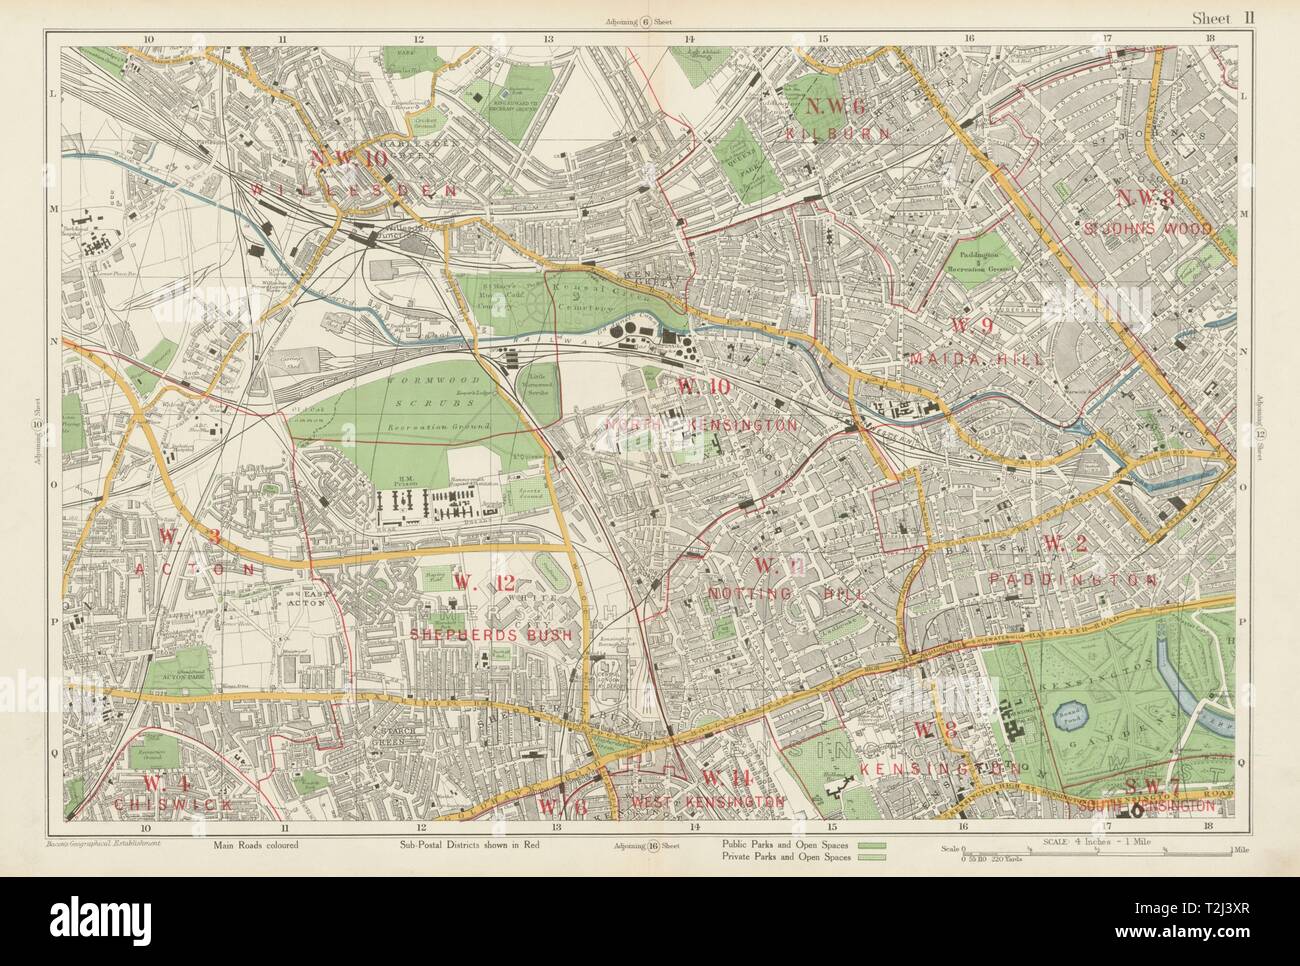 W LONDON Kilburn Bayswater Maida Vale Notting Hill Shepherds Bush.BACON 1934 map Stock Photo